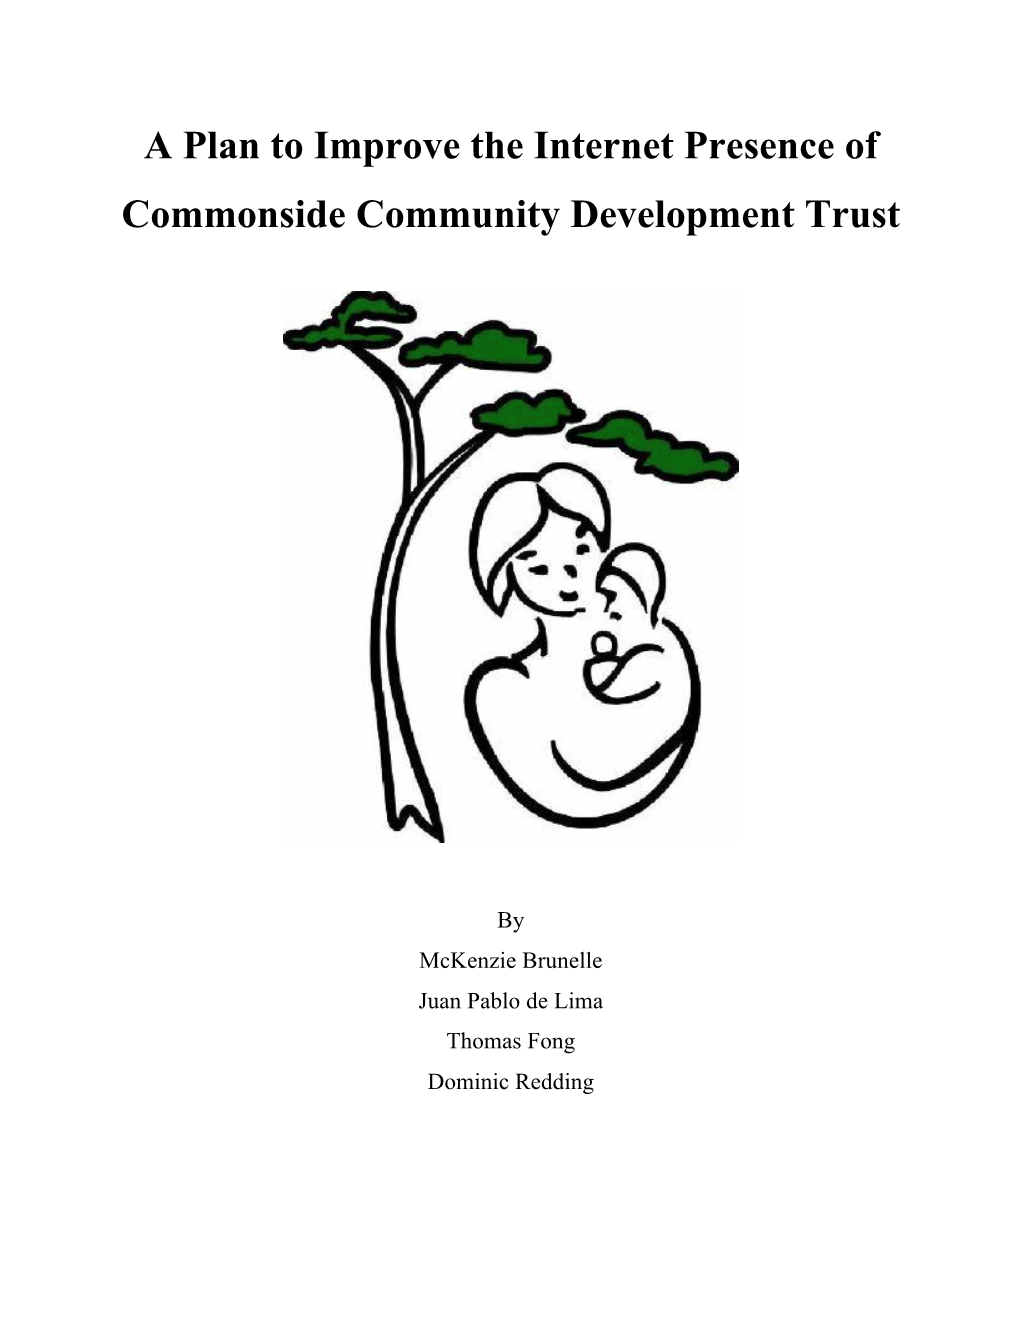 A Plan to Improve the Internet Presence of Commonside Community Development Trust